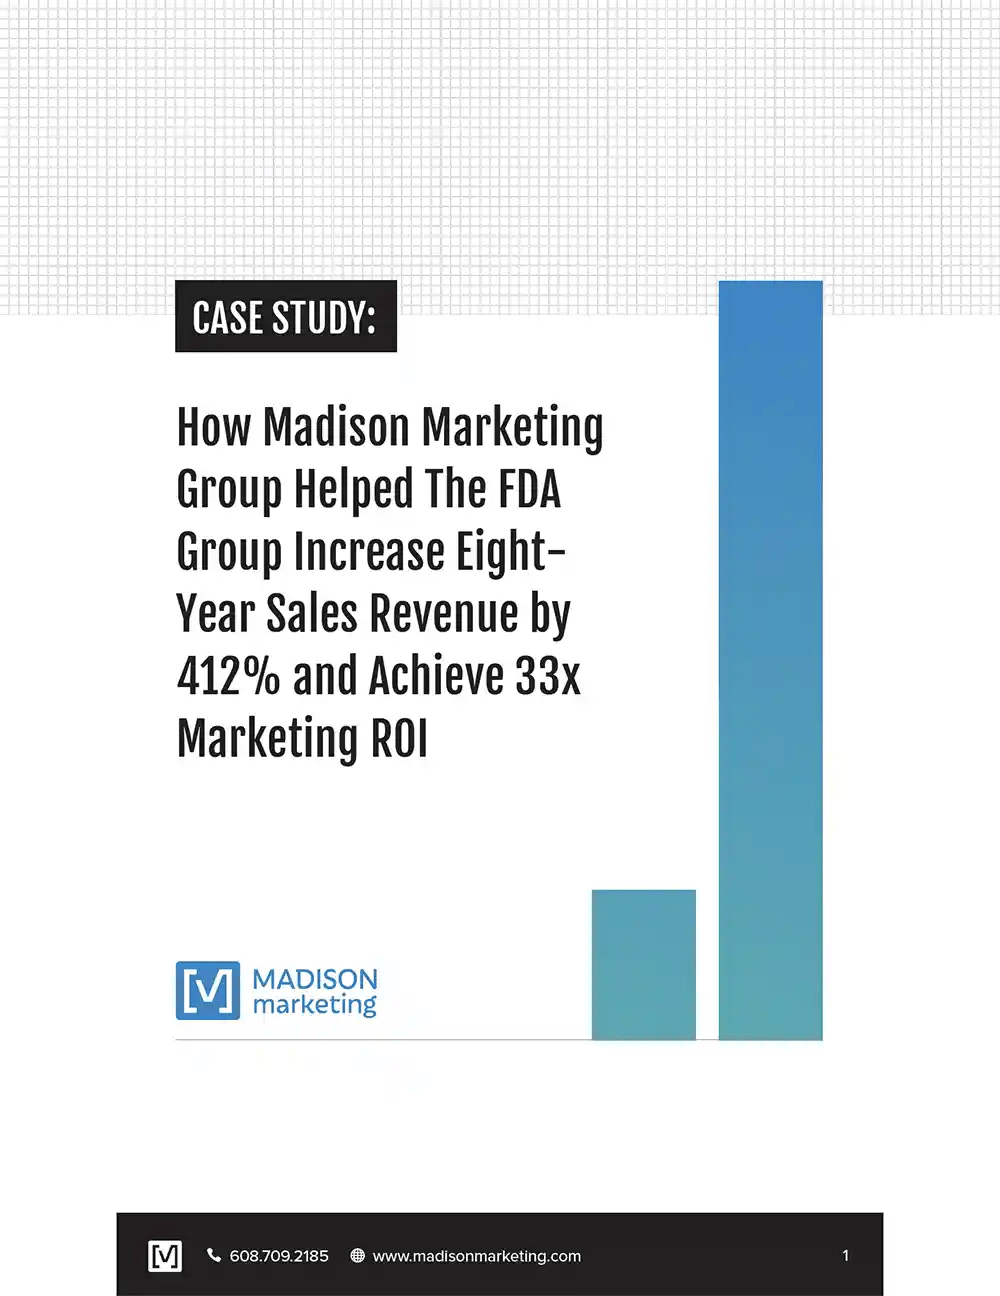 FDA Group case study cover